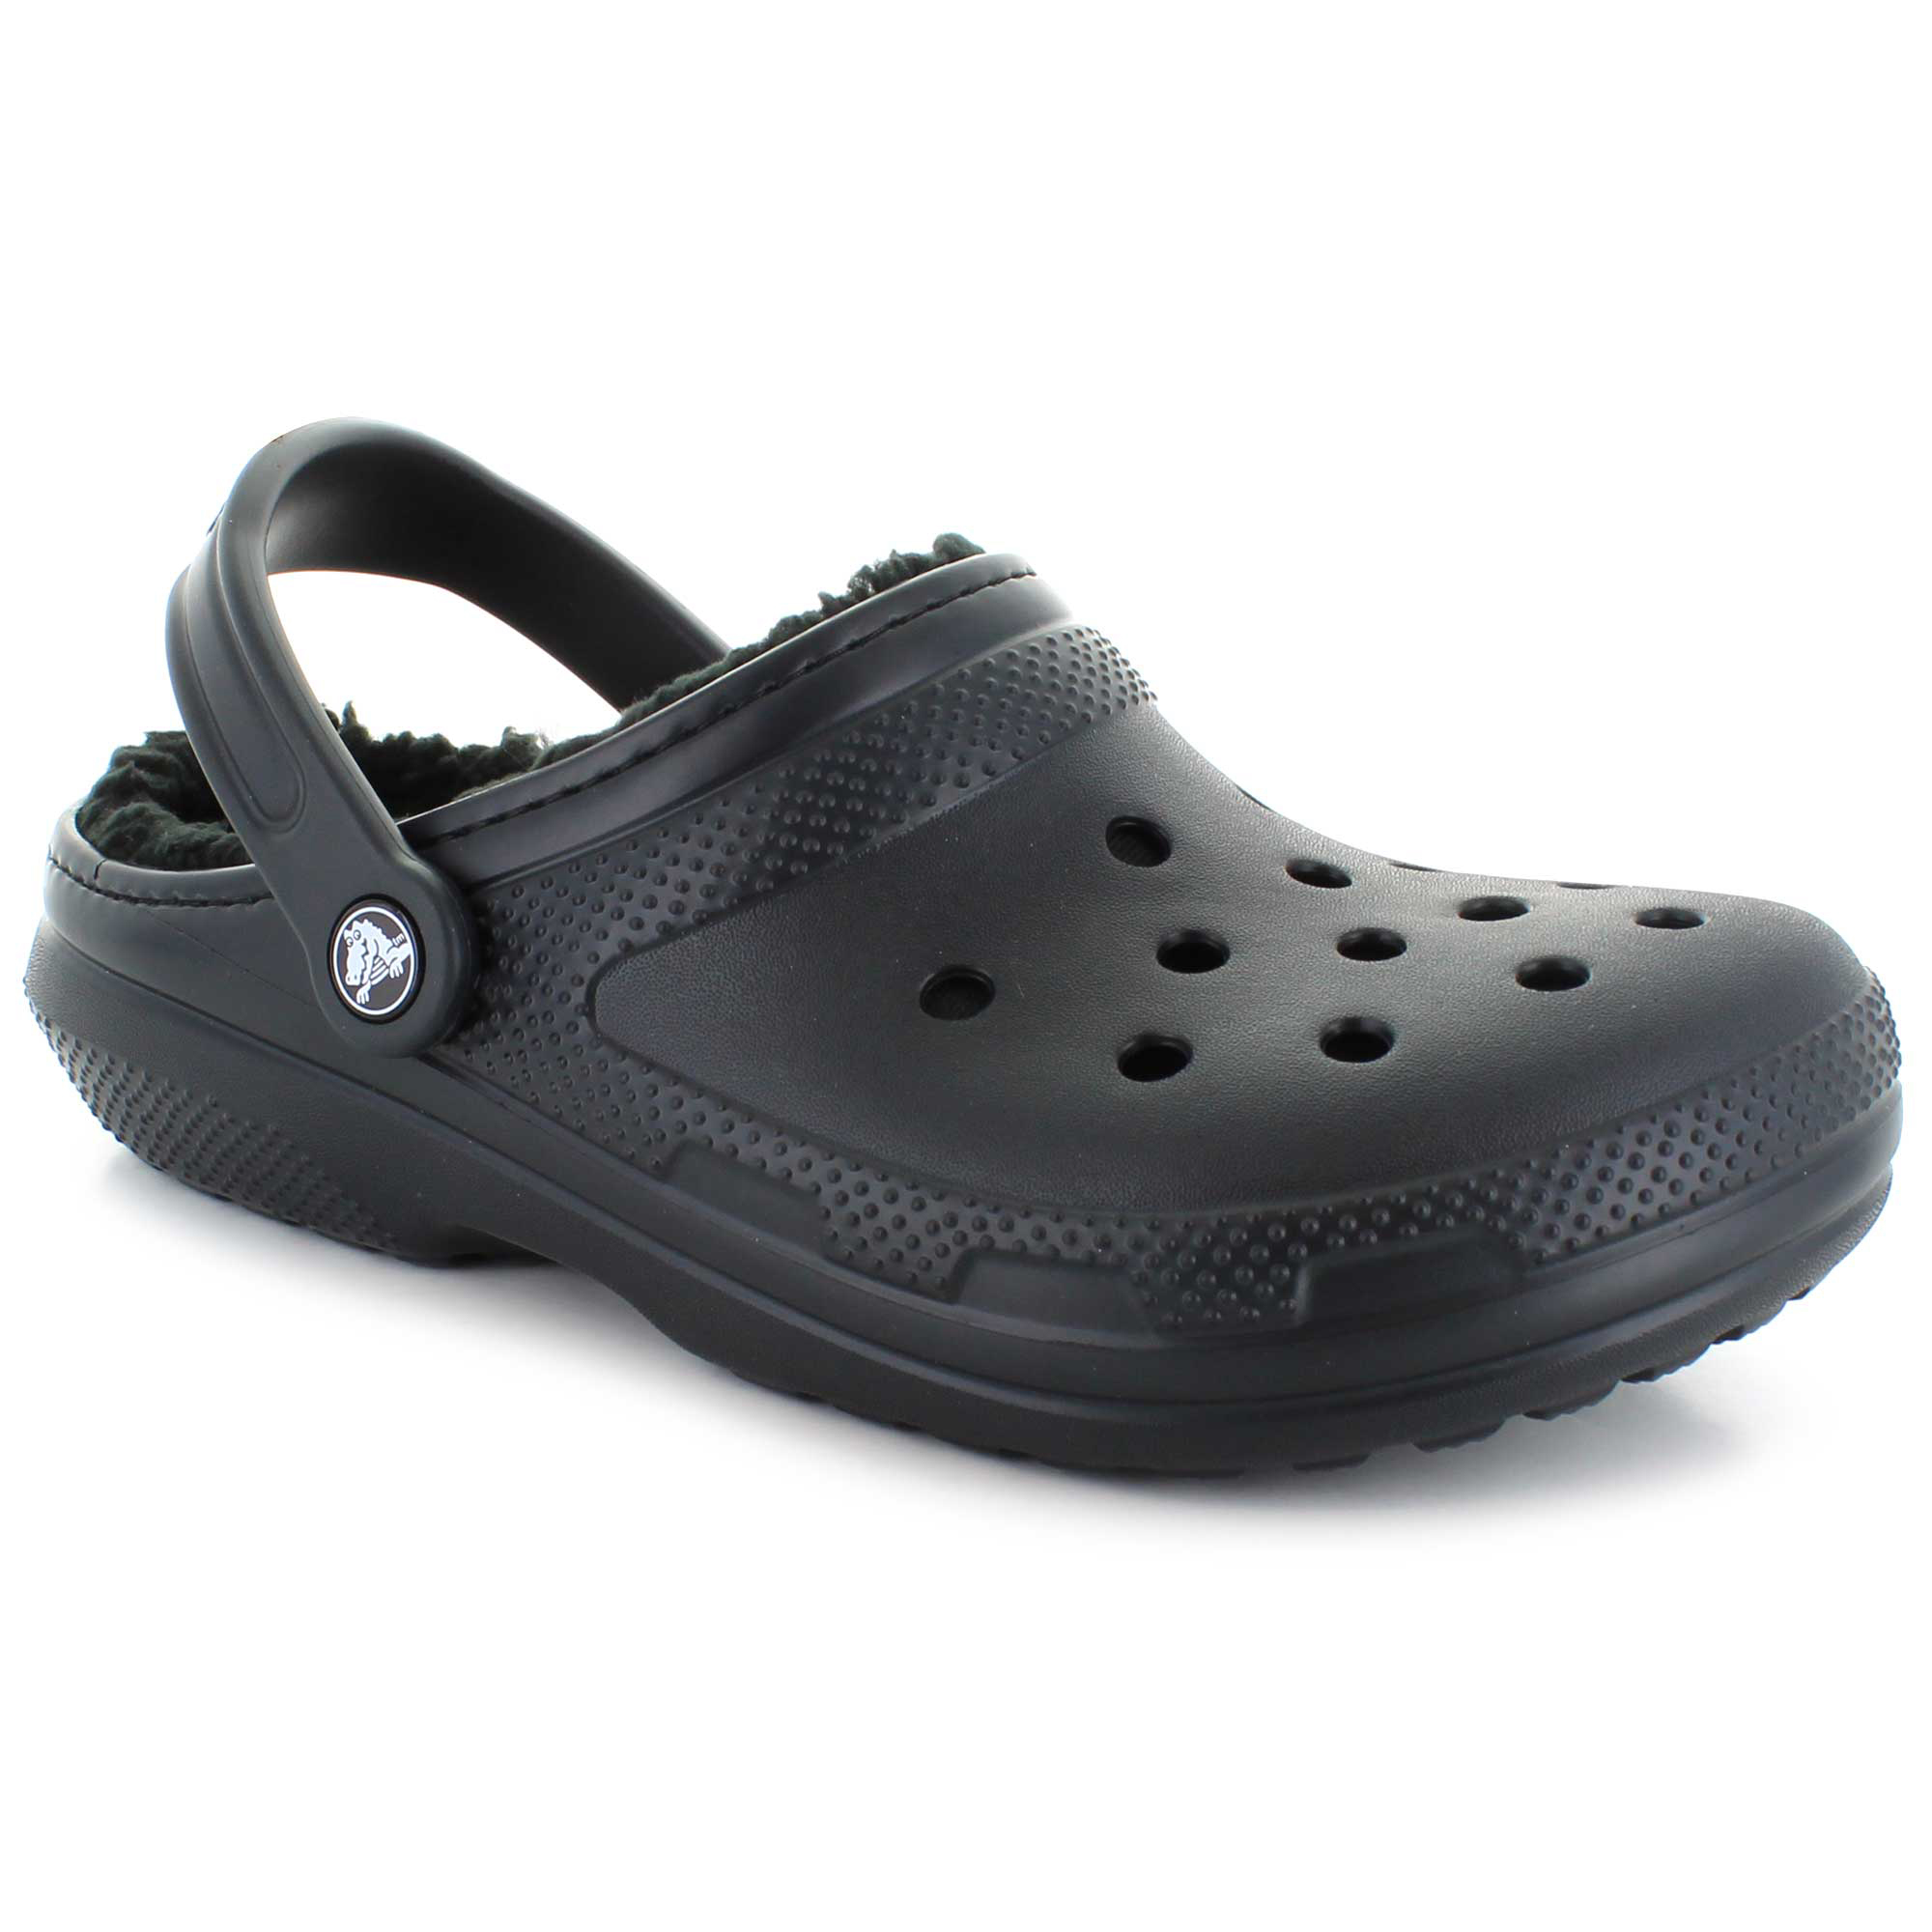 white crocs shoe dept